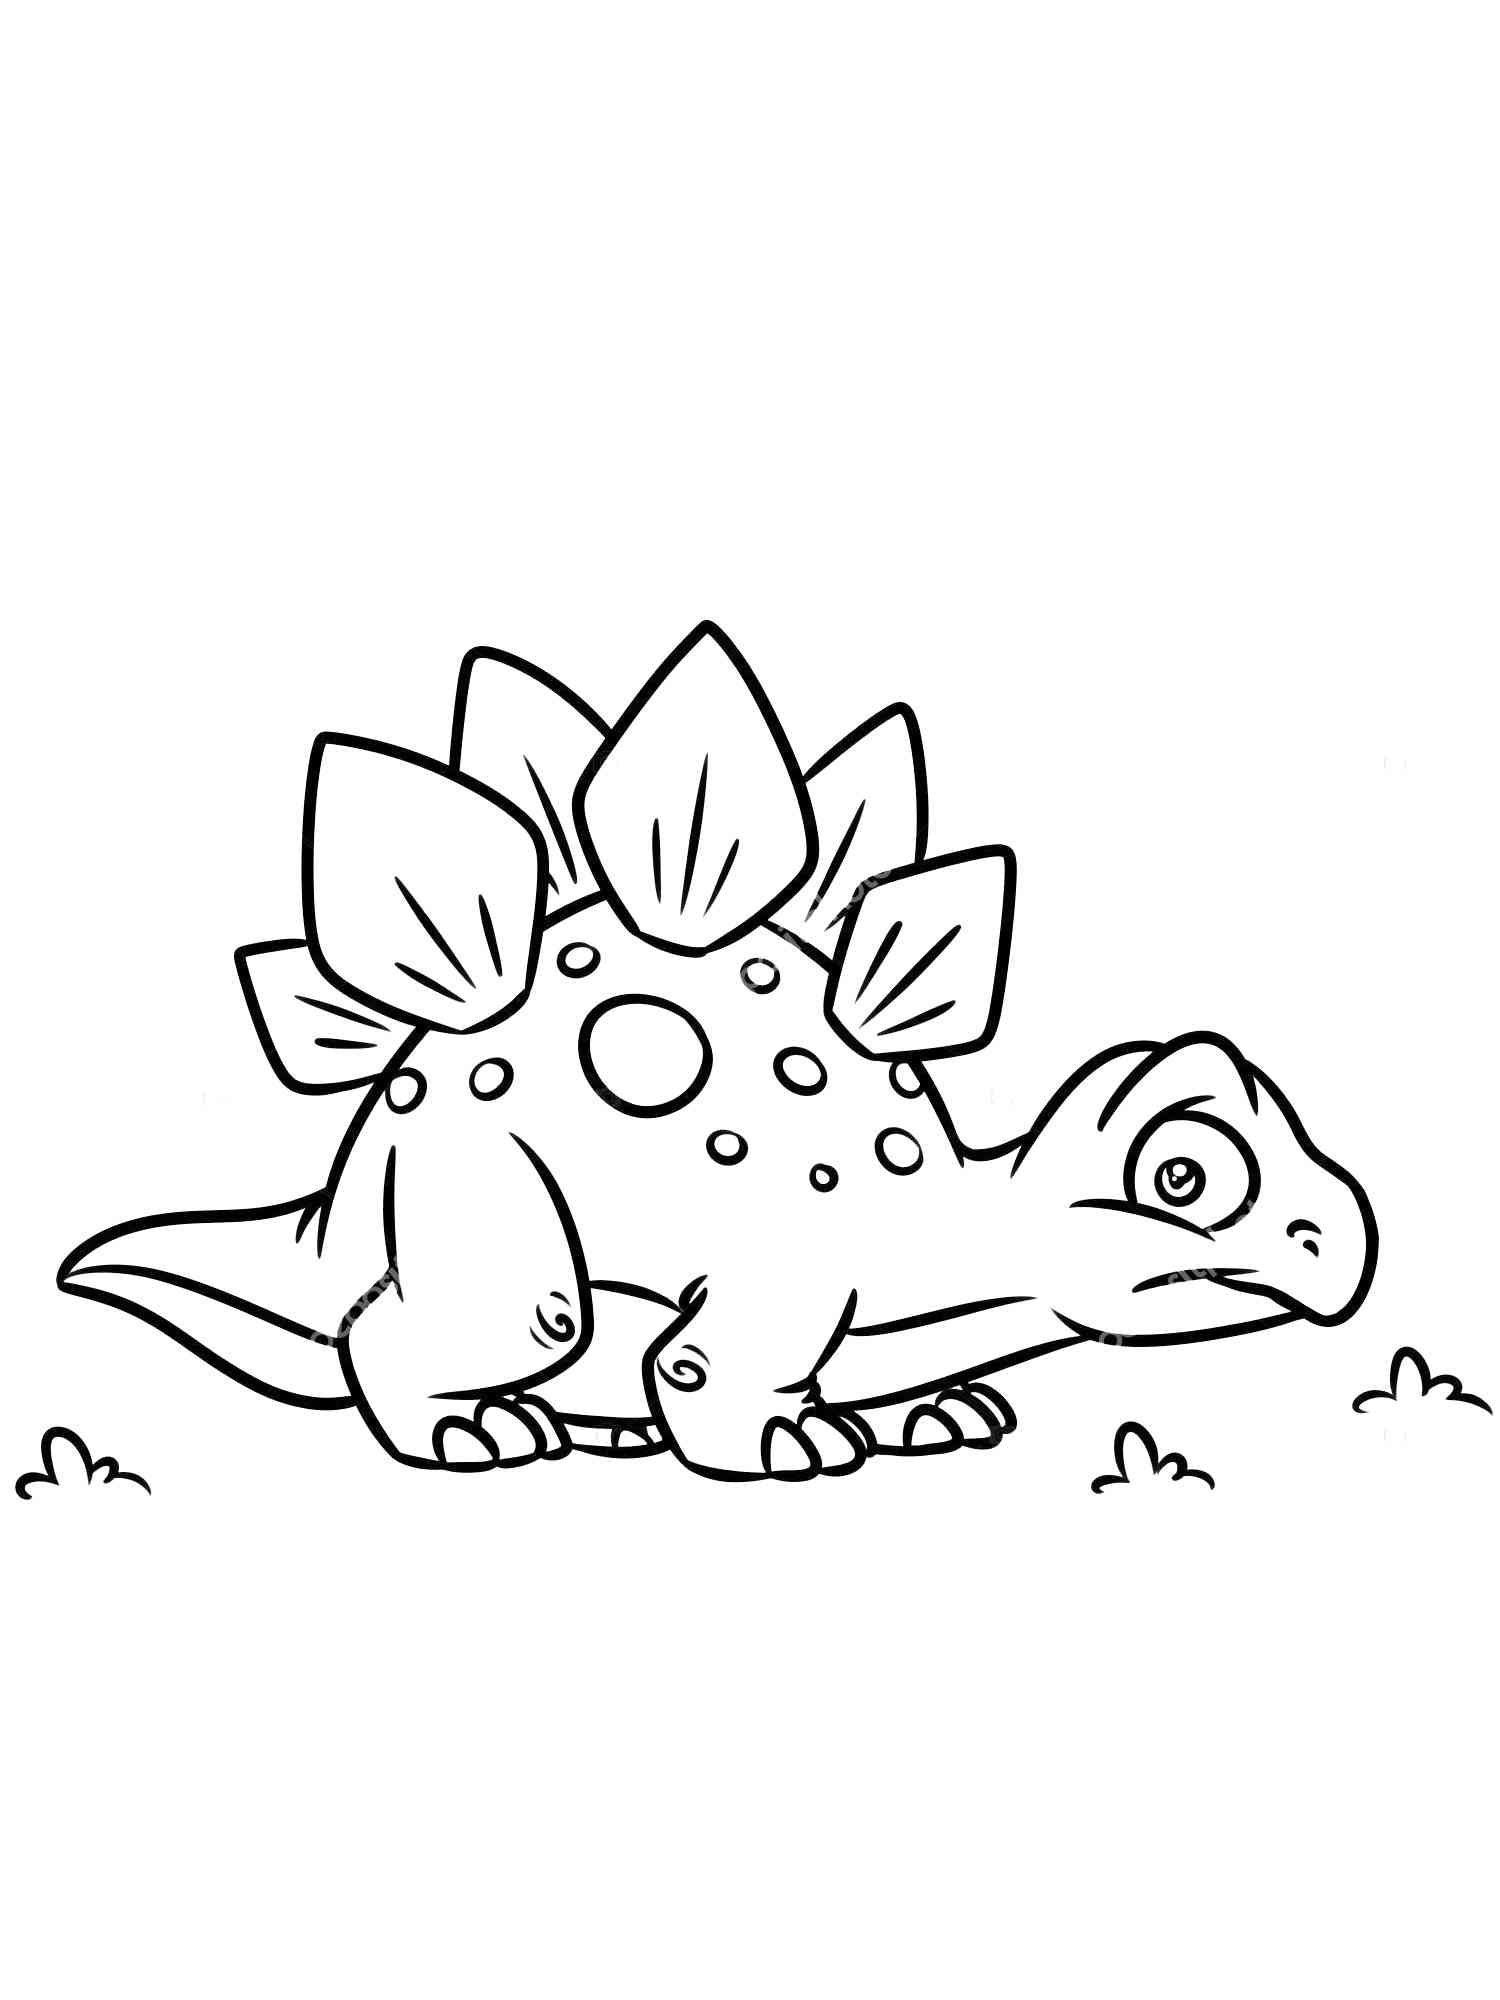 Baby Stegosaurus coloring page